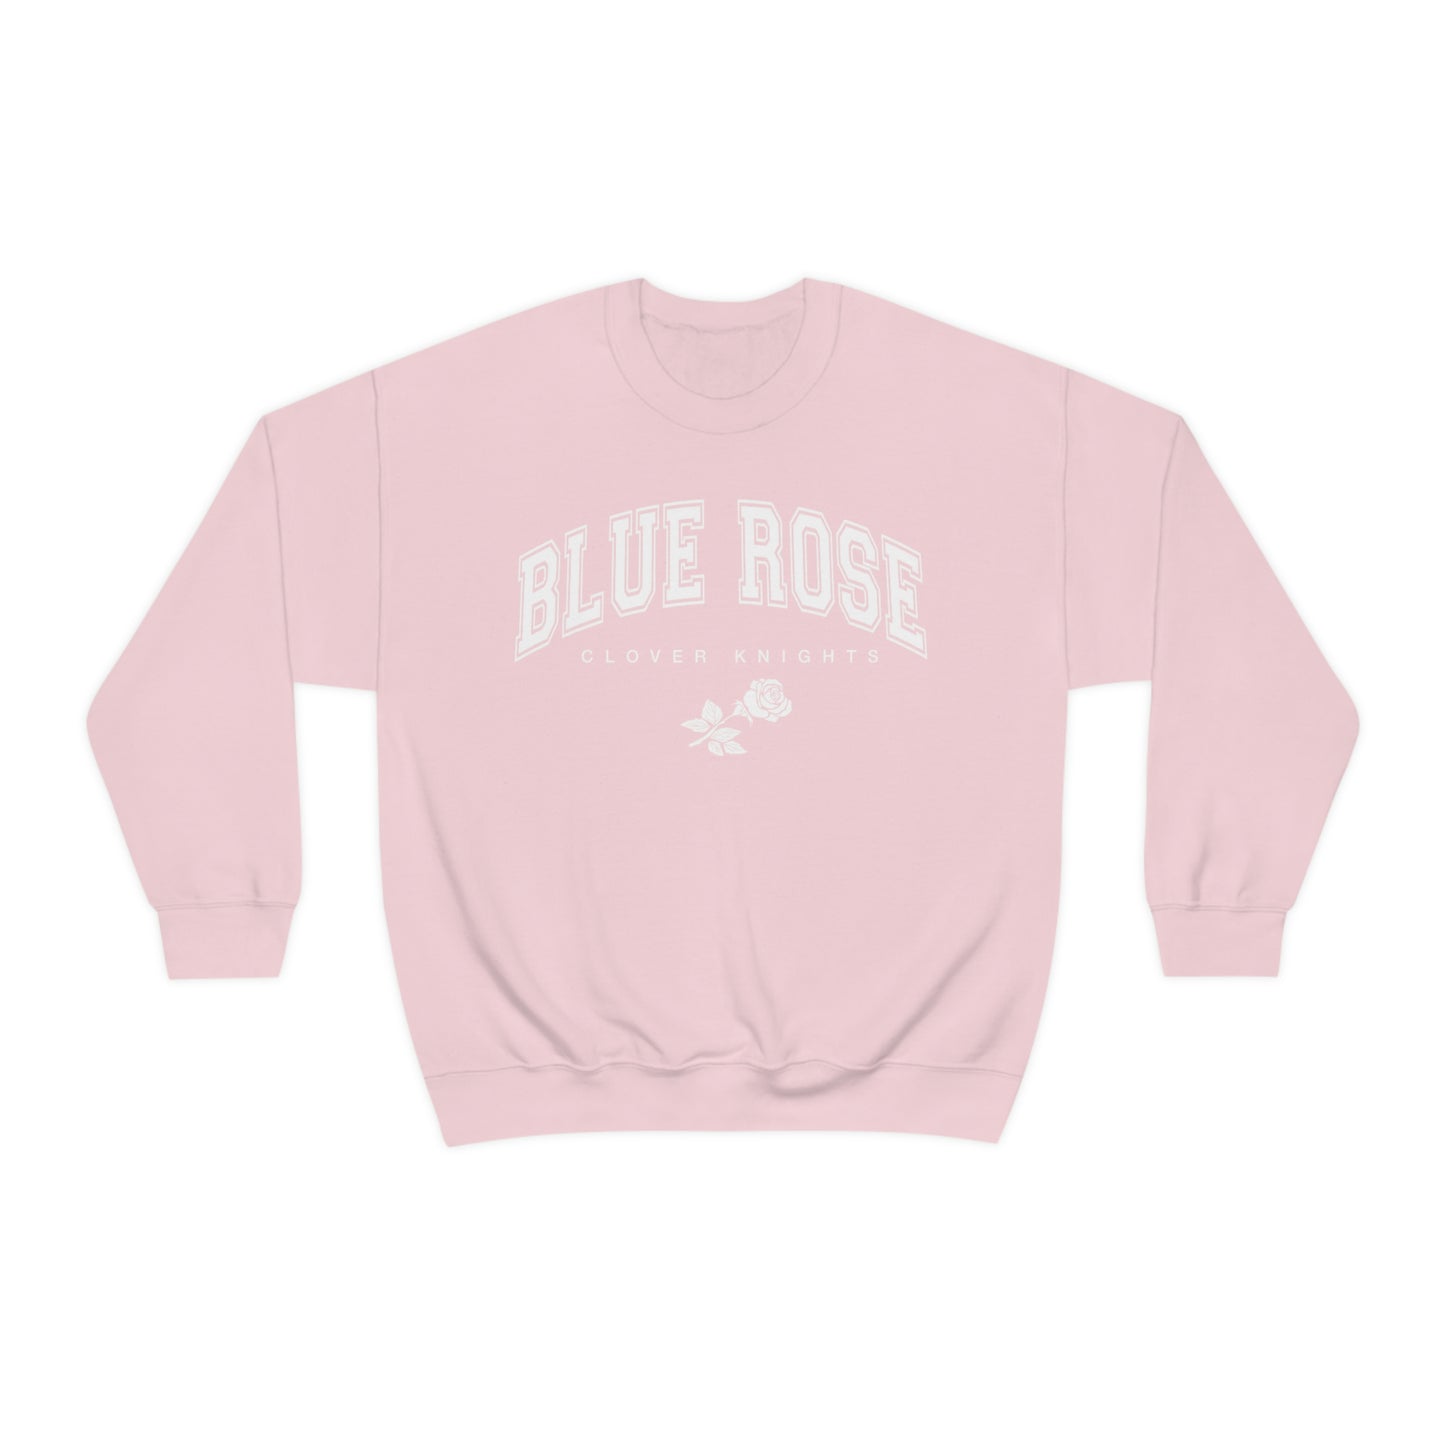 Blue Rose sweatshirt crew neck